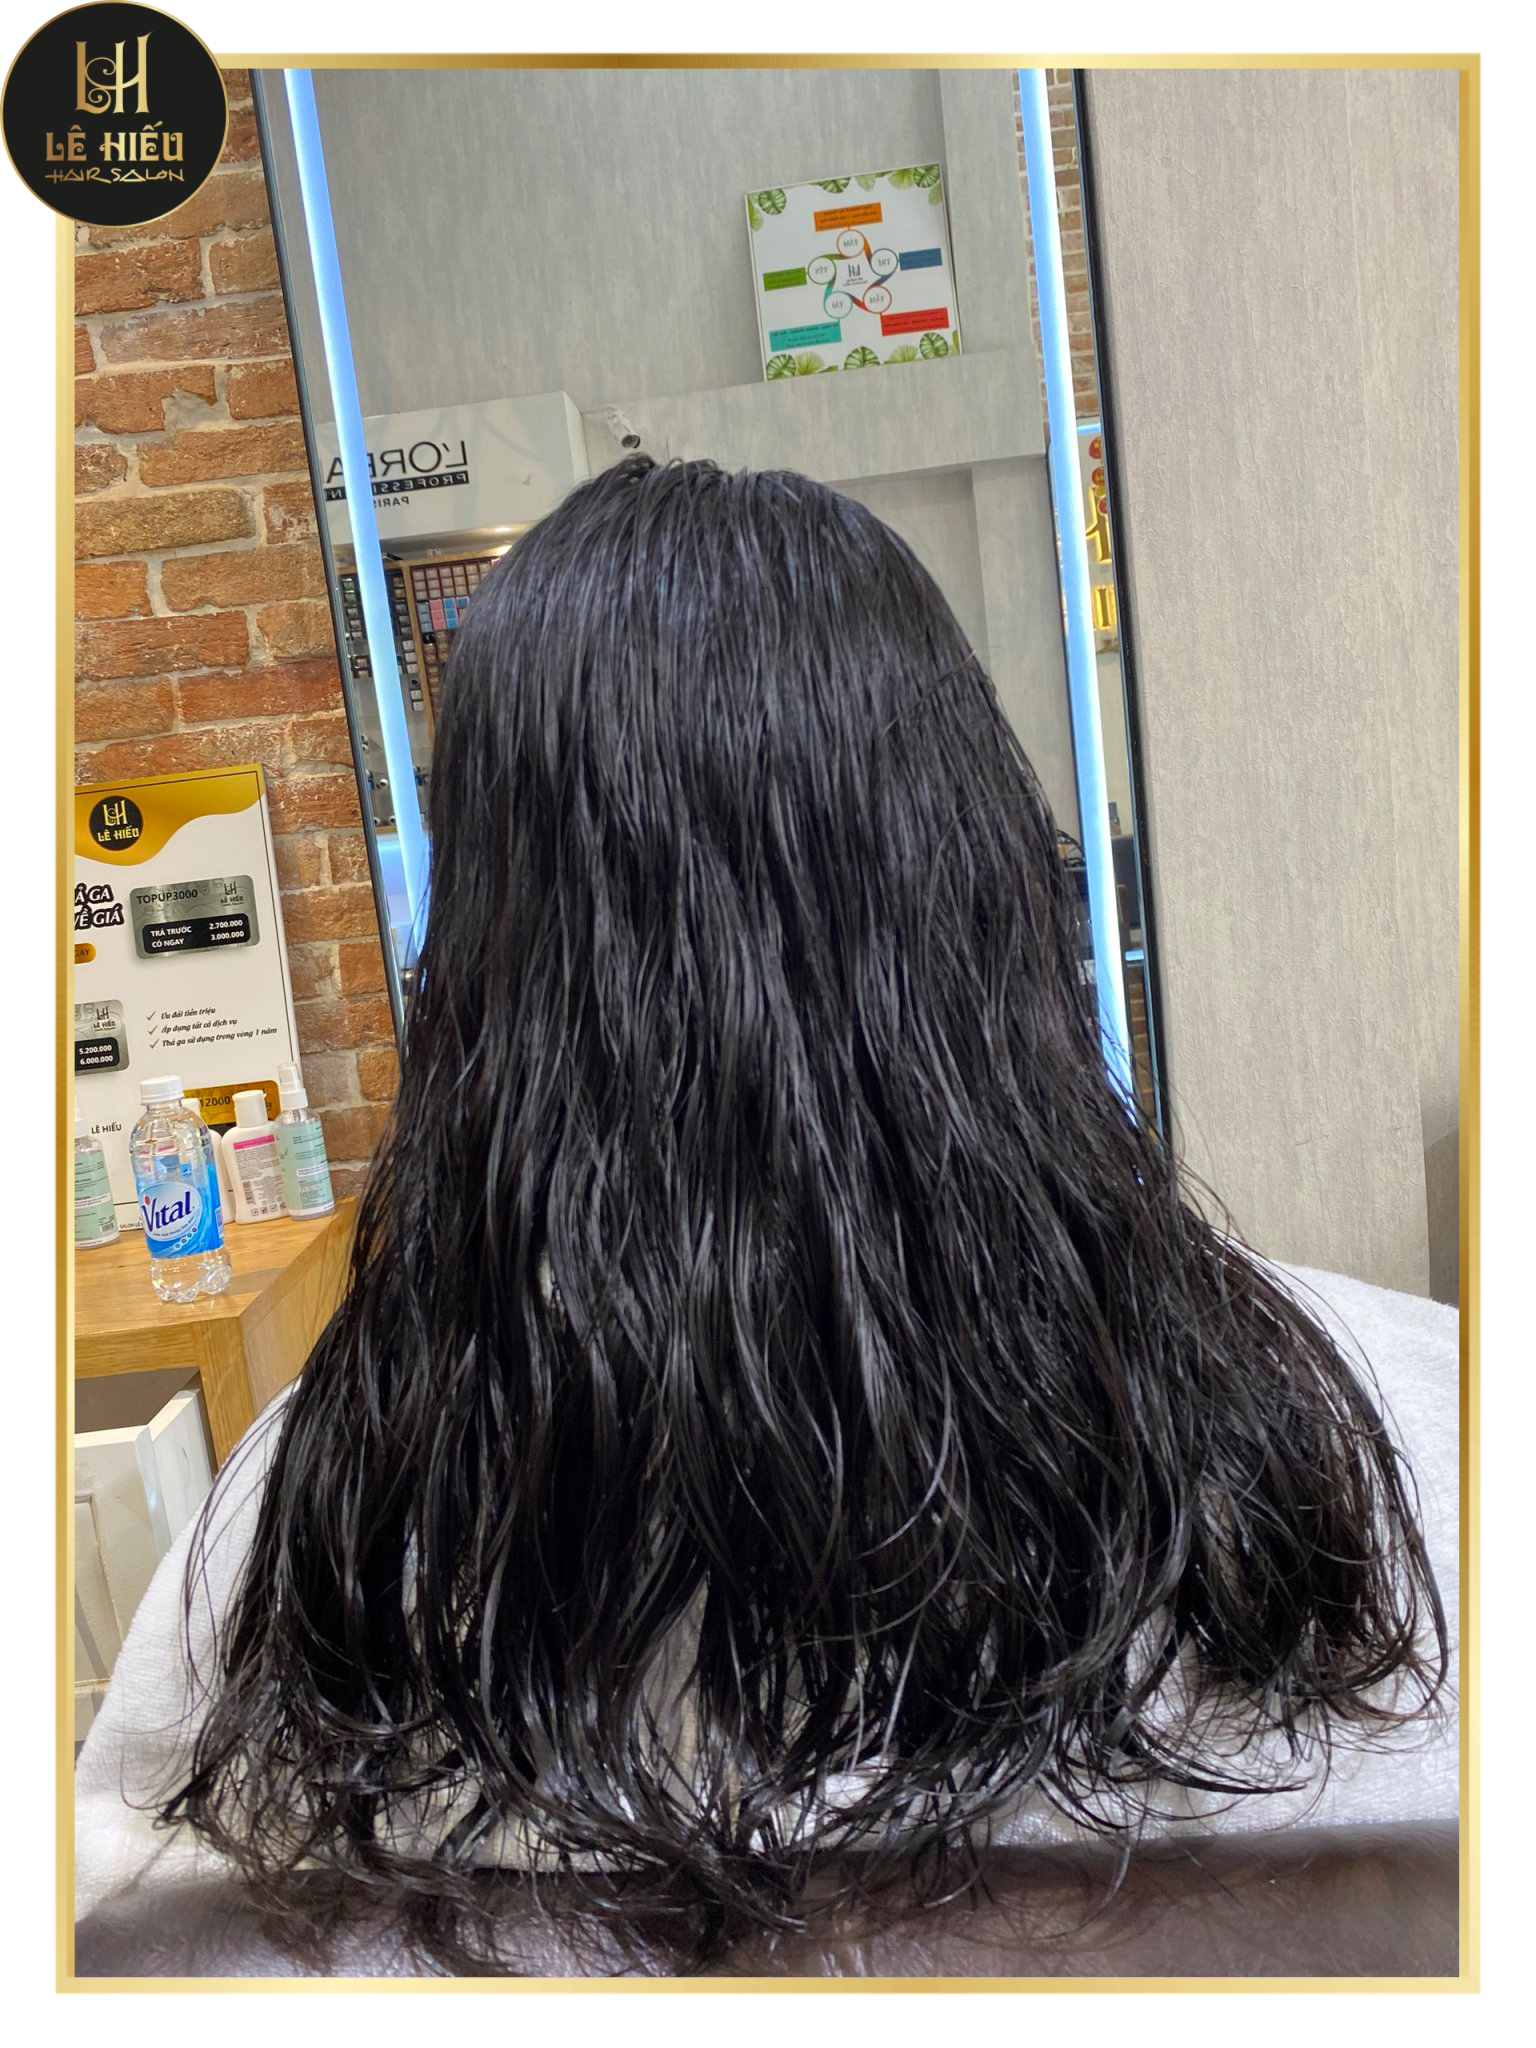 Salon chăm sóc tóc đẹp uy tin tại Sài Gòn